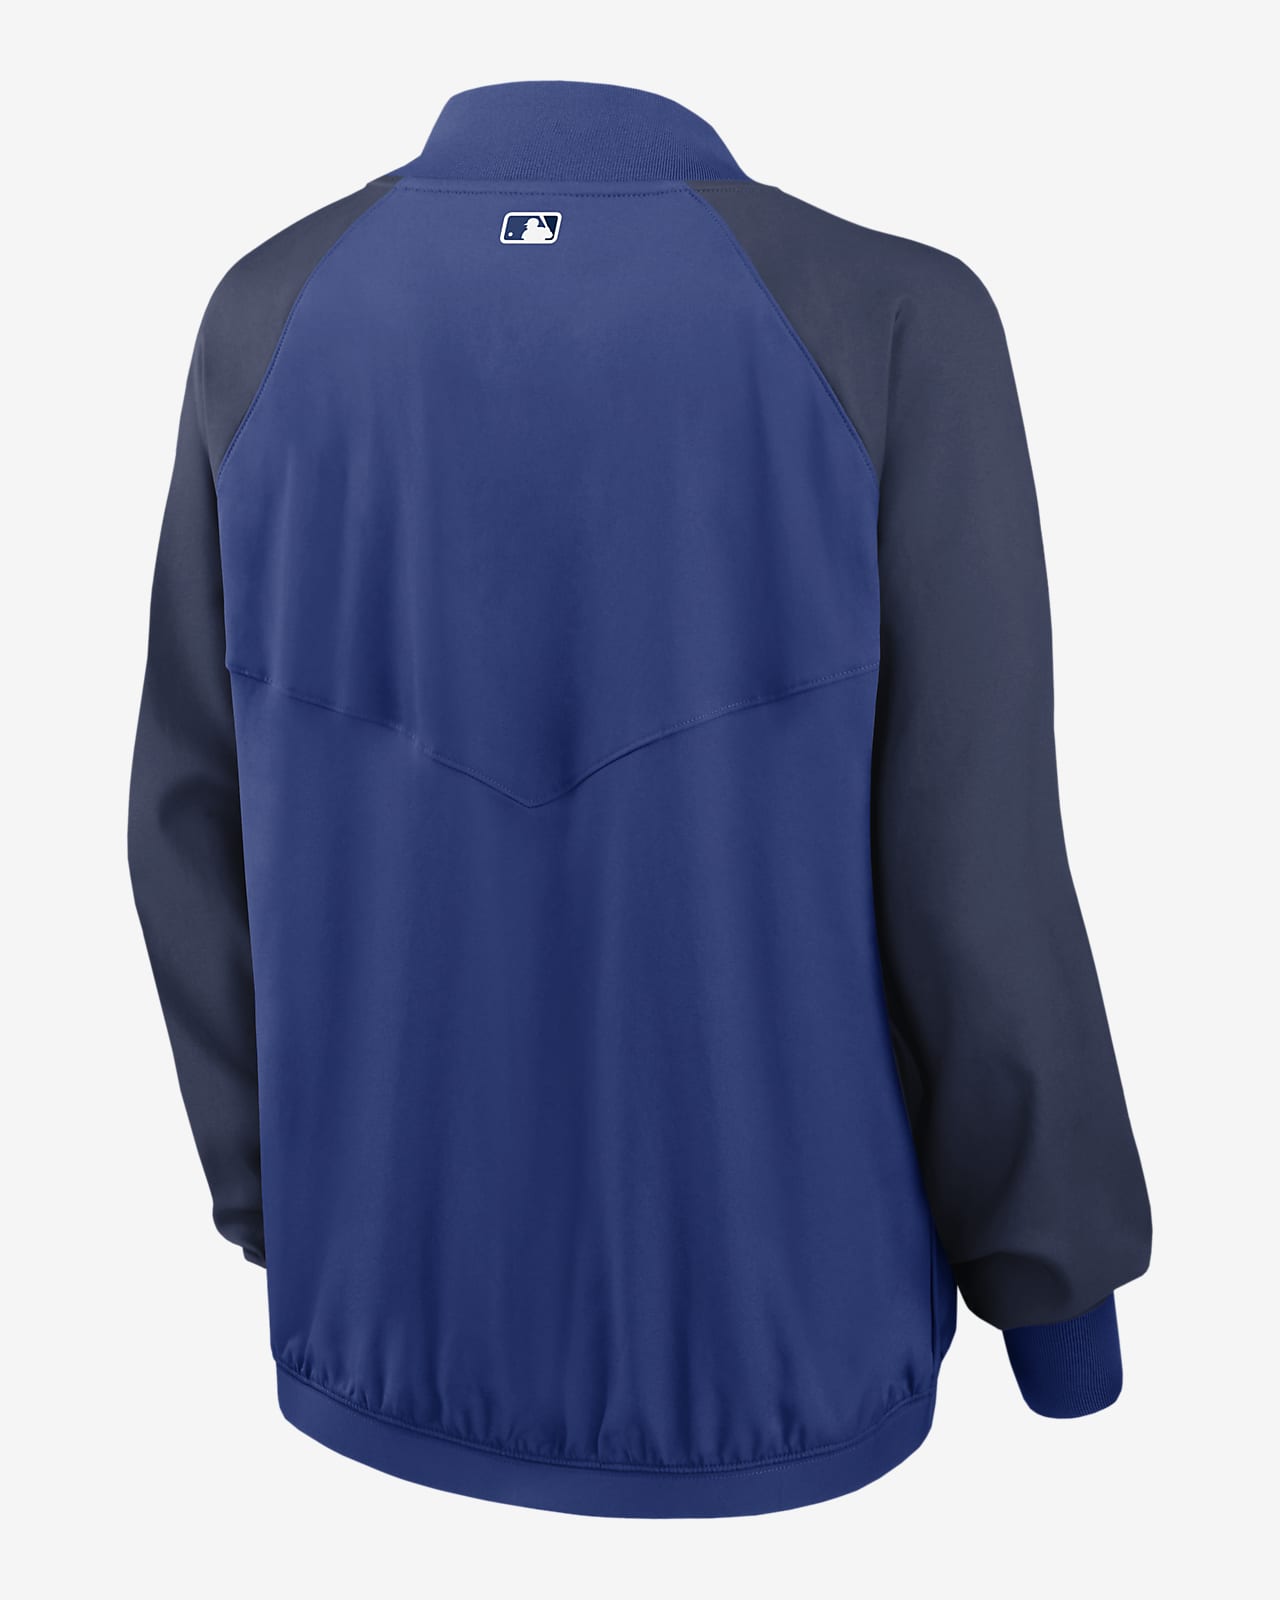 Nike Dri-FIT Team (MLB Toronto Blue Jays) Women's Full-Zip Jacket